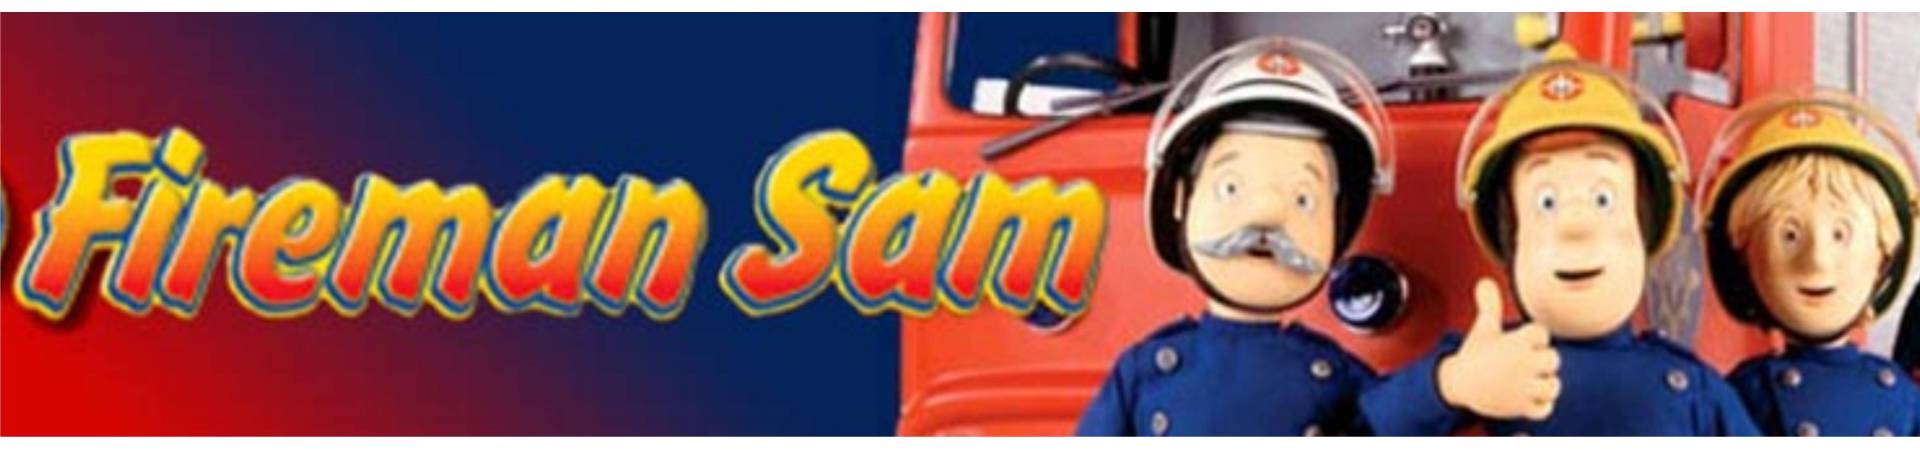 Sam the fireman